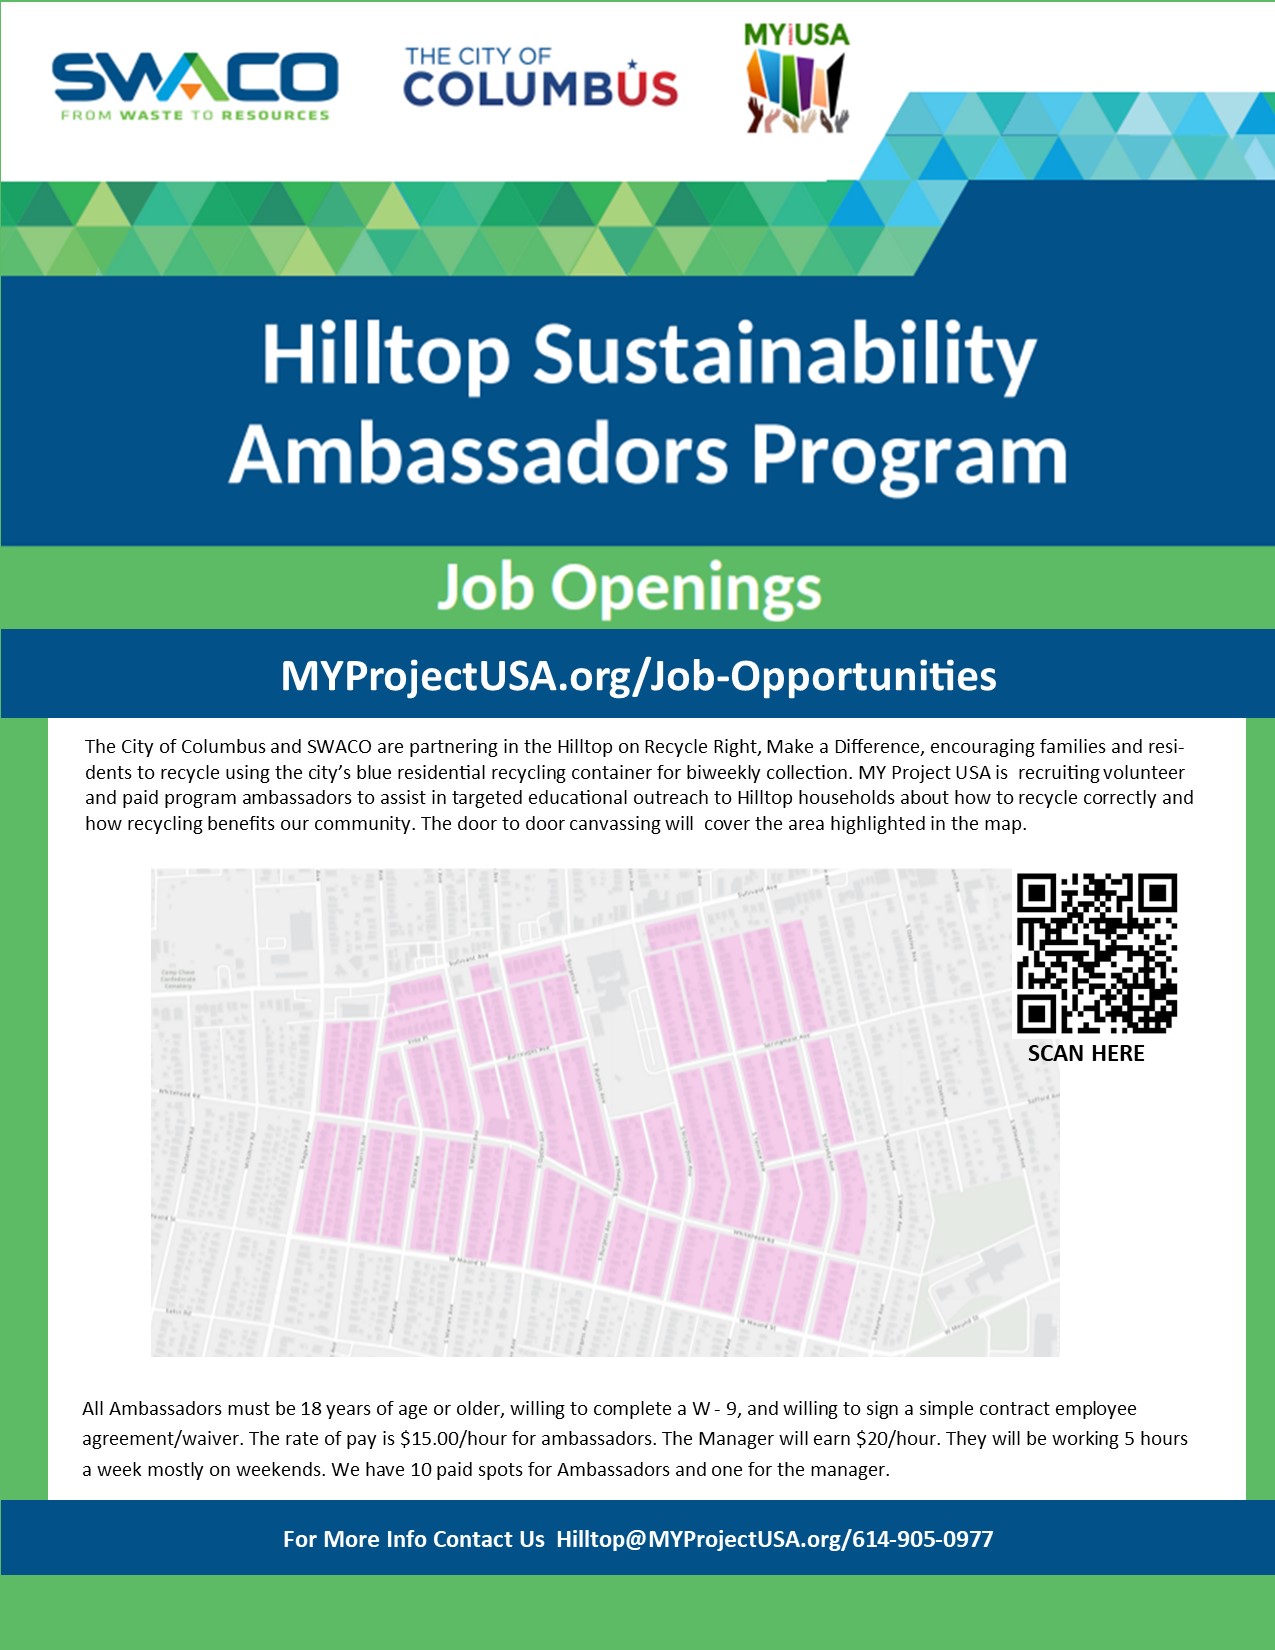 Hilltop Sustainability Program Job opening